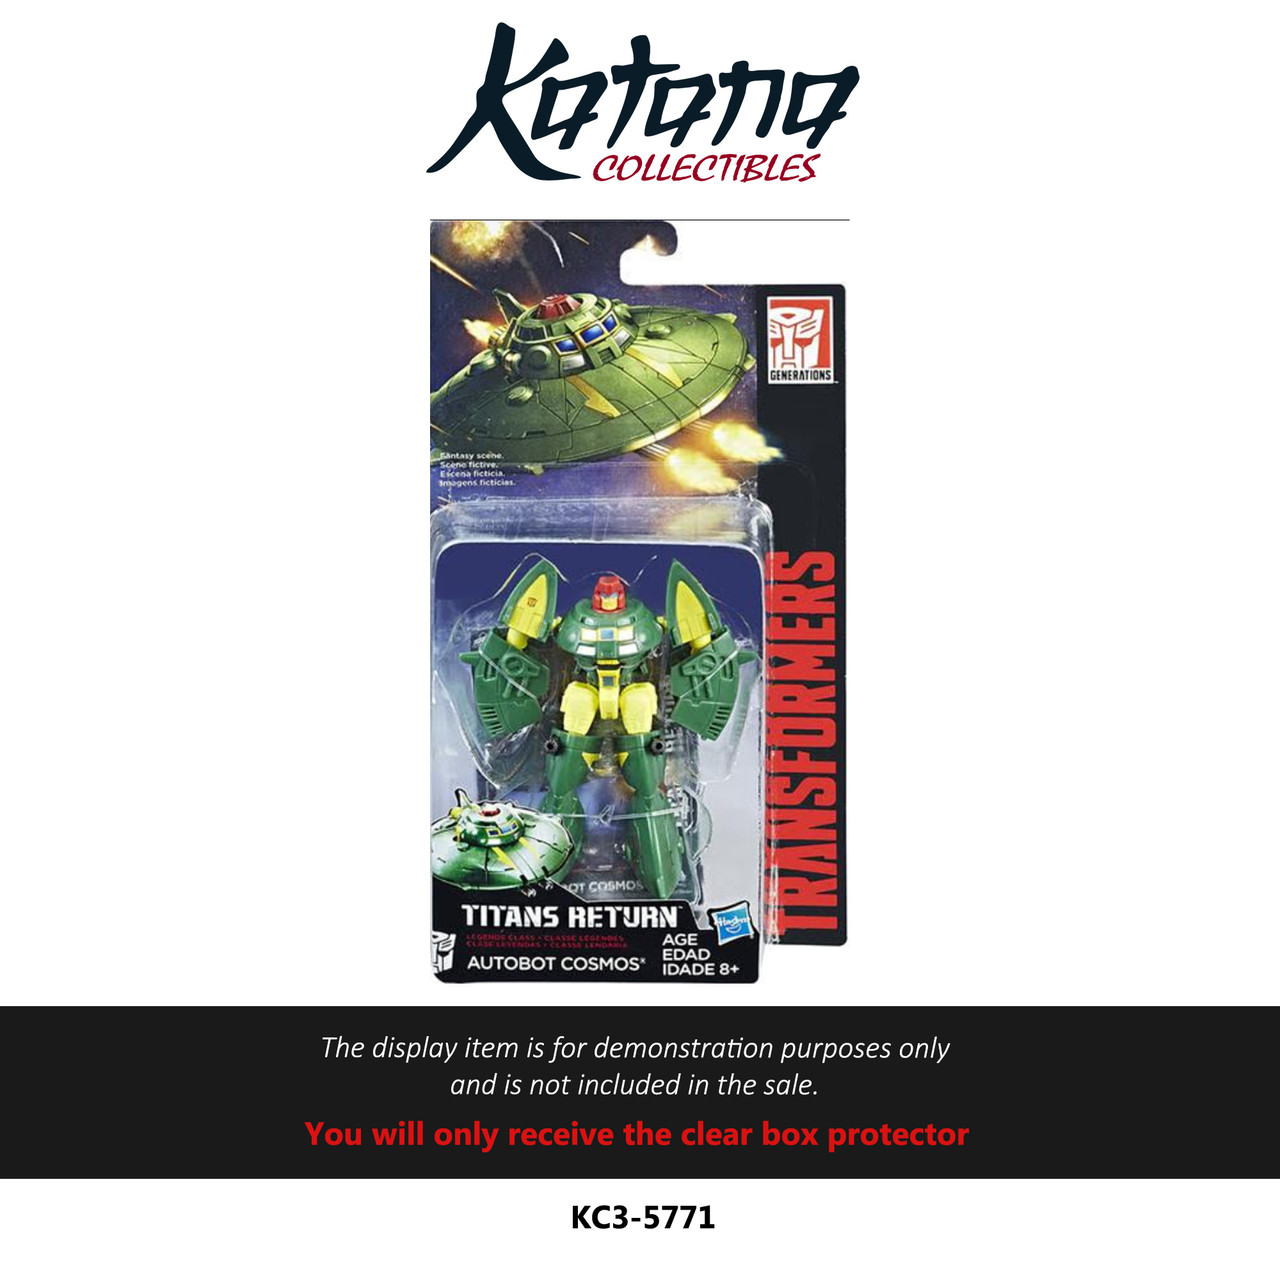 Katana Collectibles Protector For Transformers Titans Return Autobot Cosmos